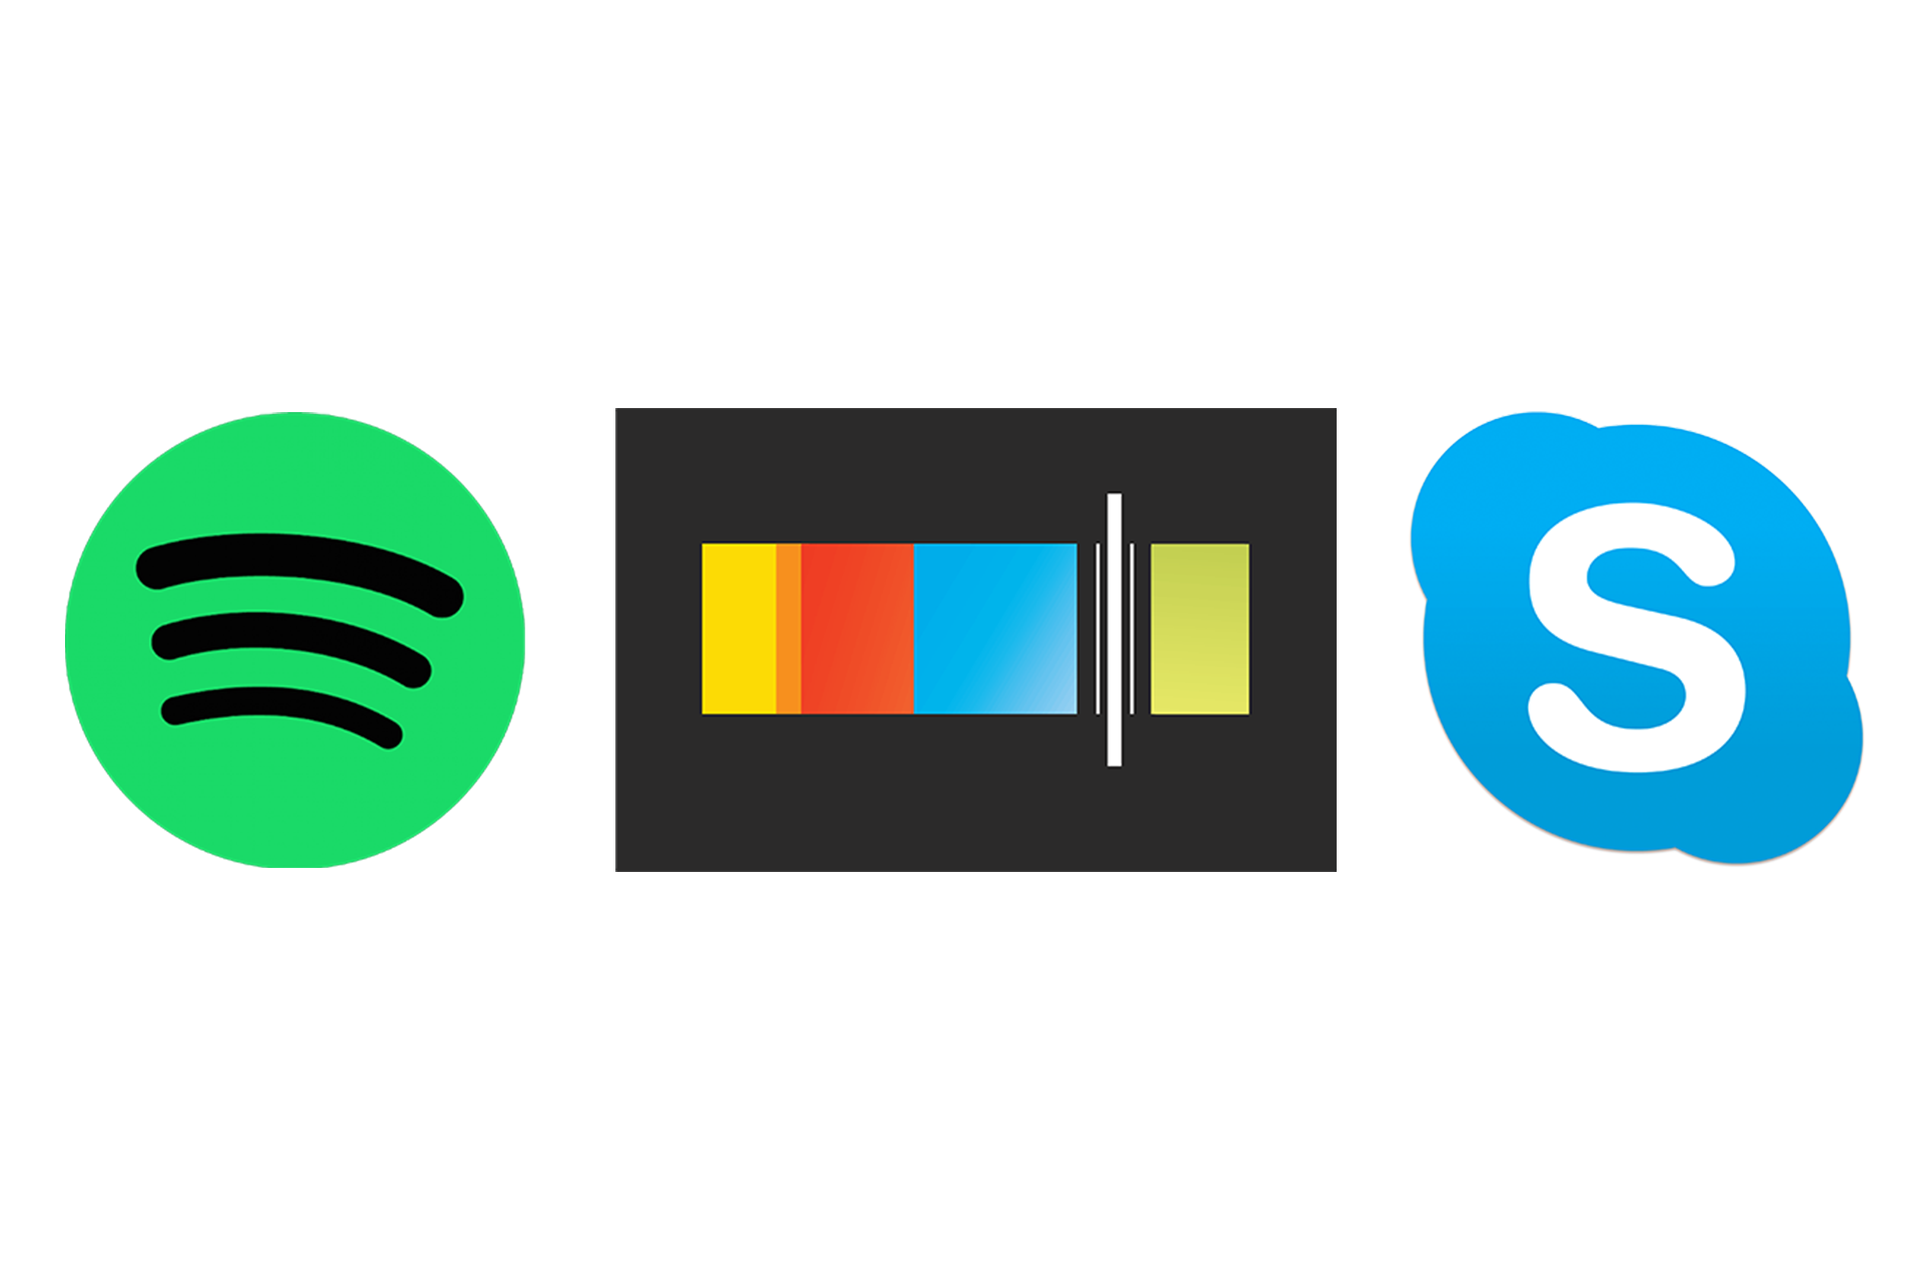 Spotify, Stitcher, Skype